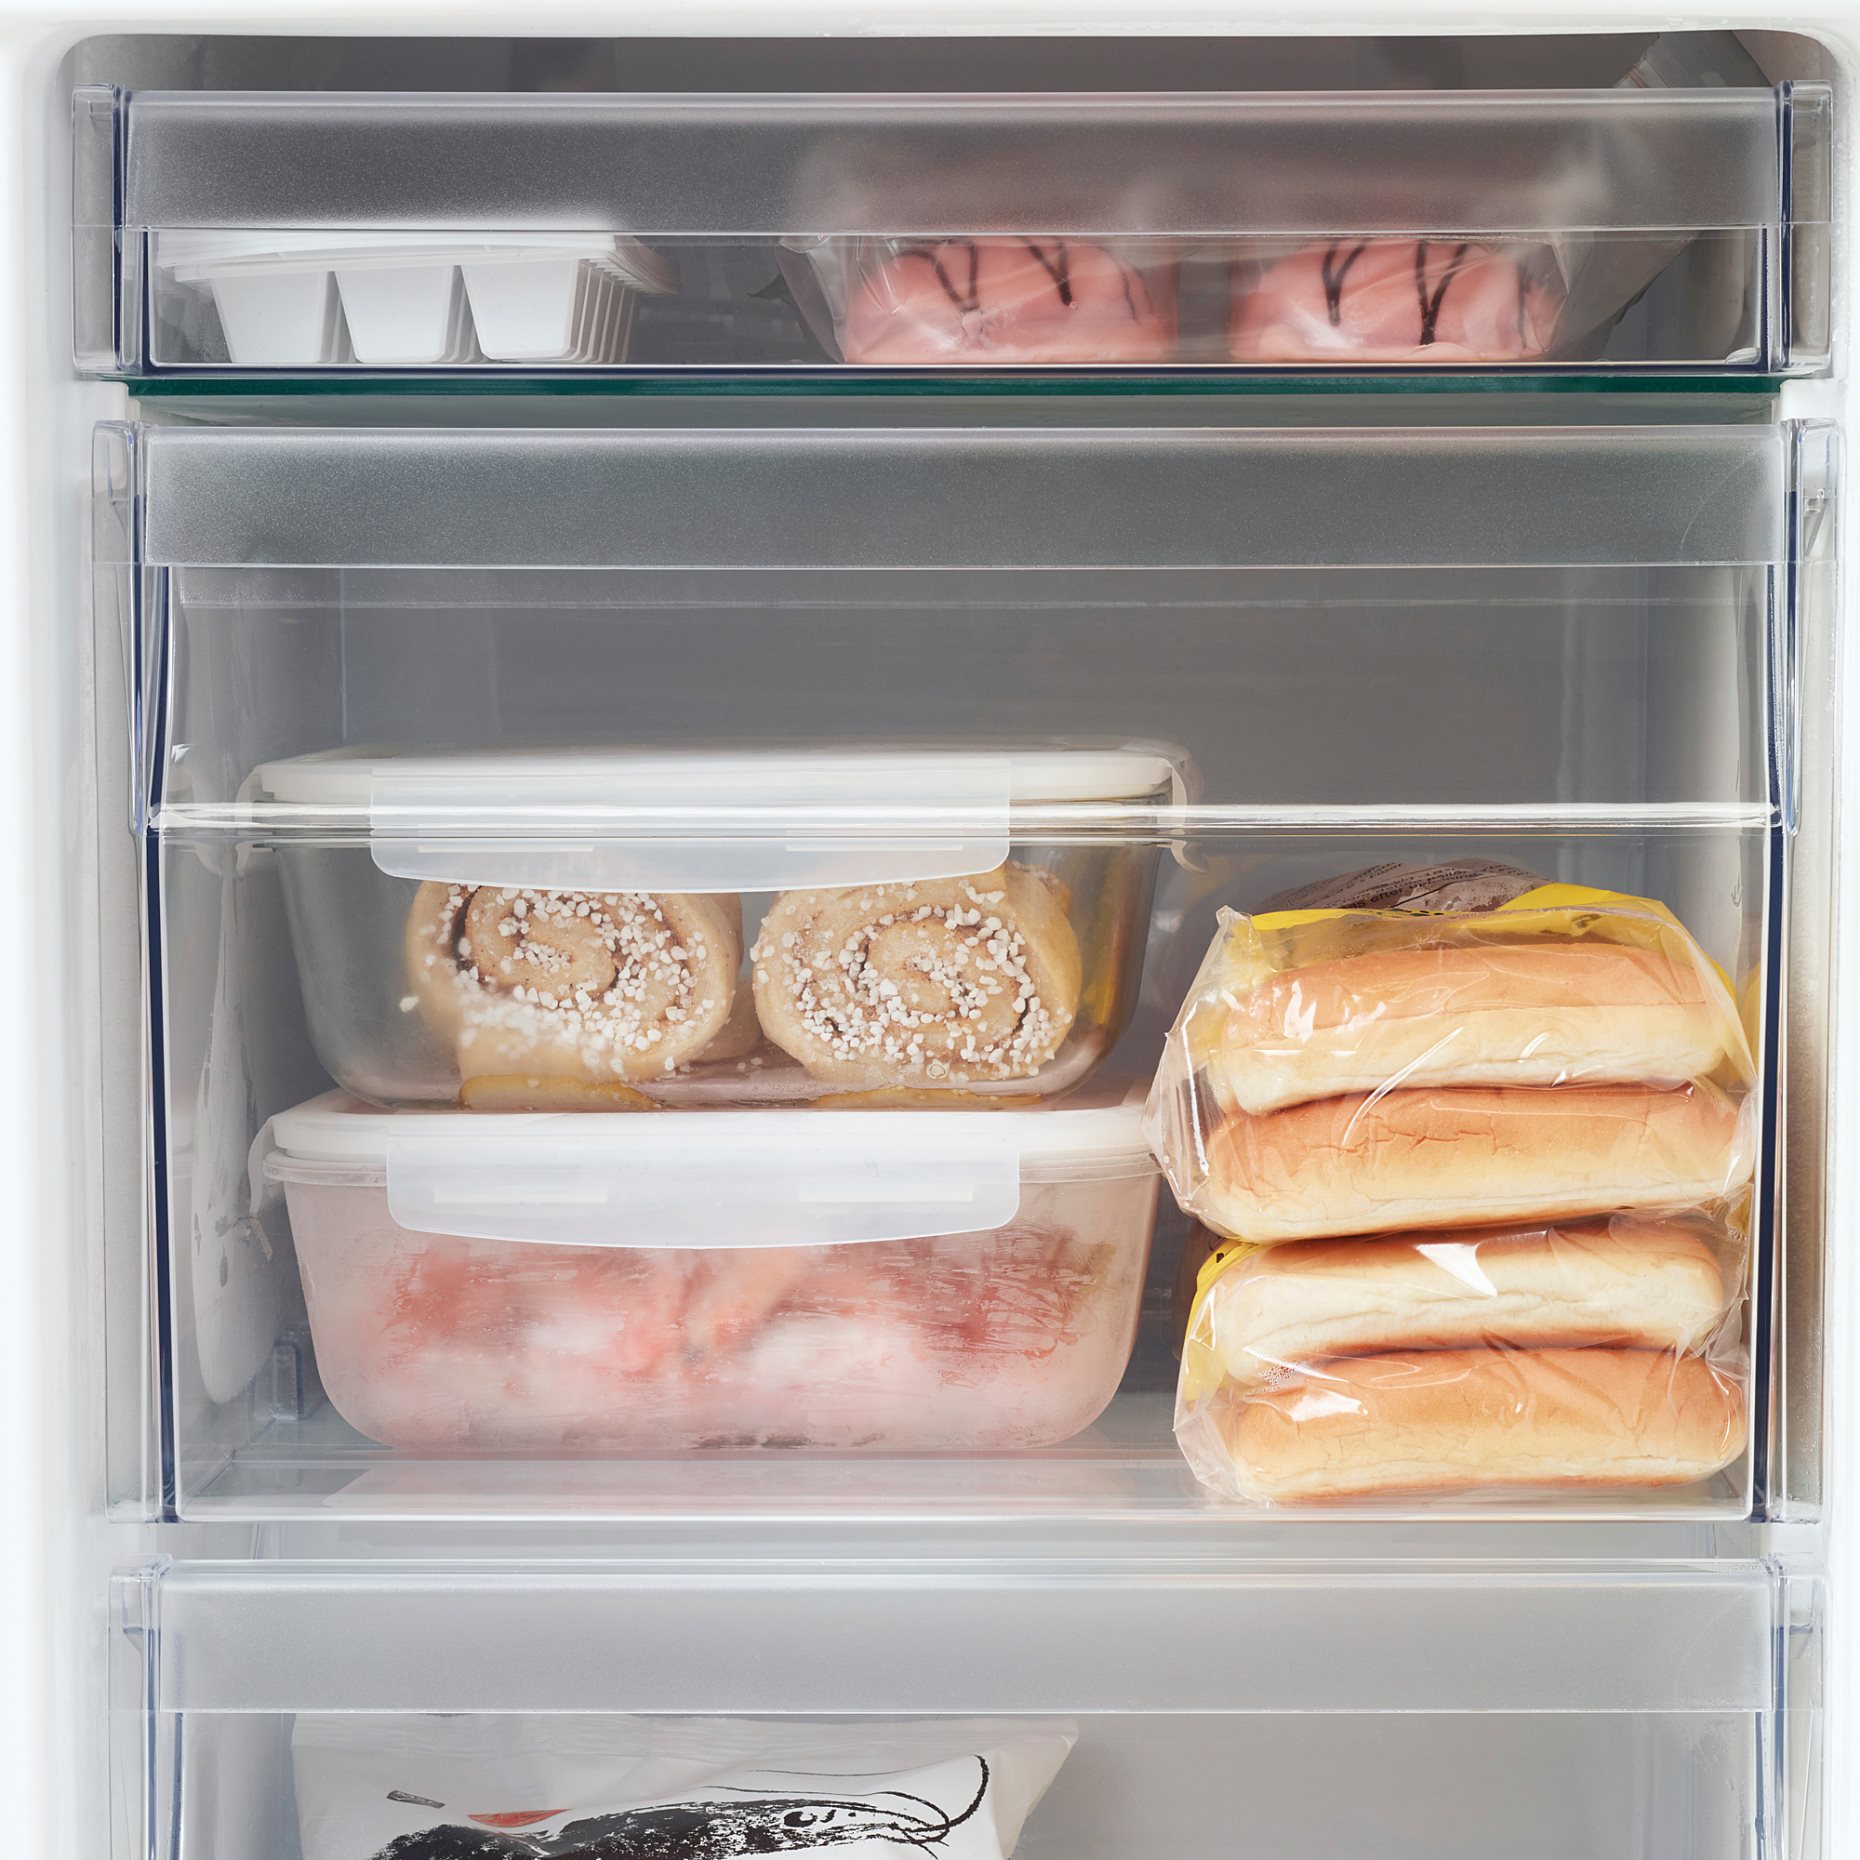 TINAD, fridge/freezer/IKEA 550 integrated, 210/79 l, 604.999.54